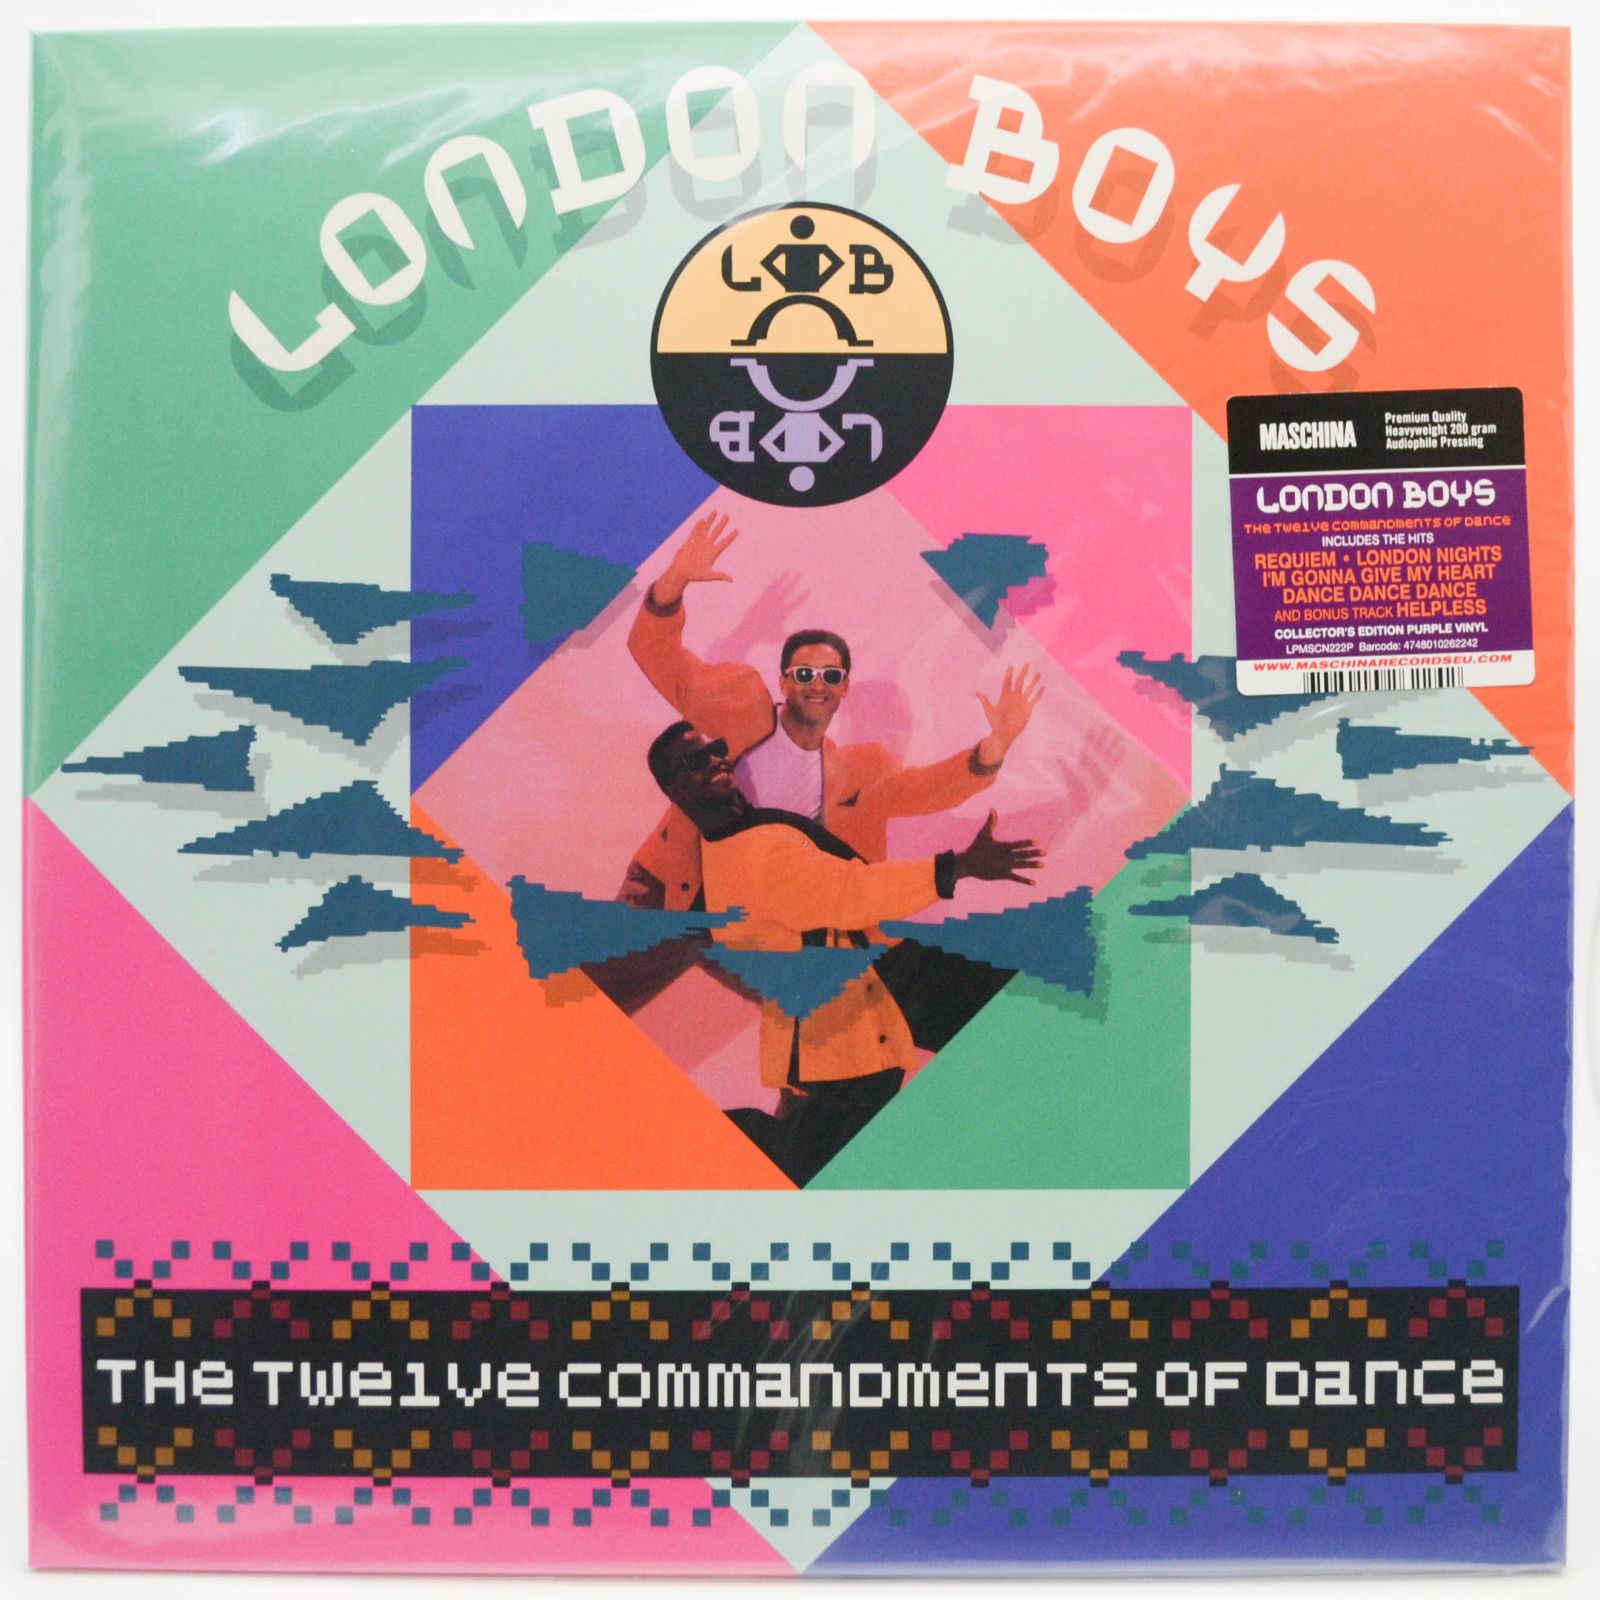 London Boys — The Twelve Commandments Of Dance, 1988